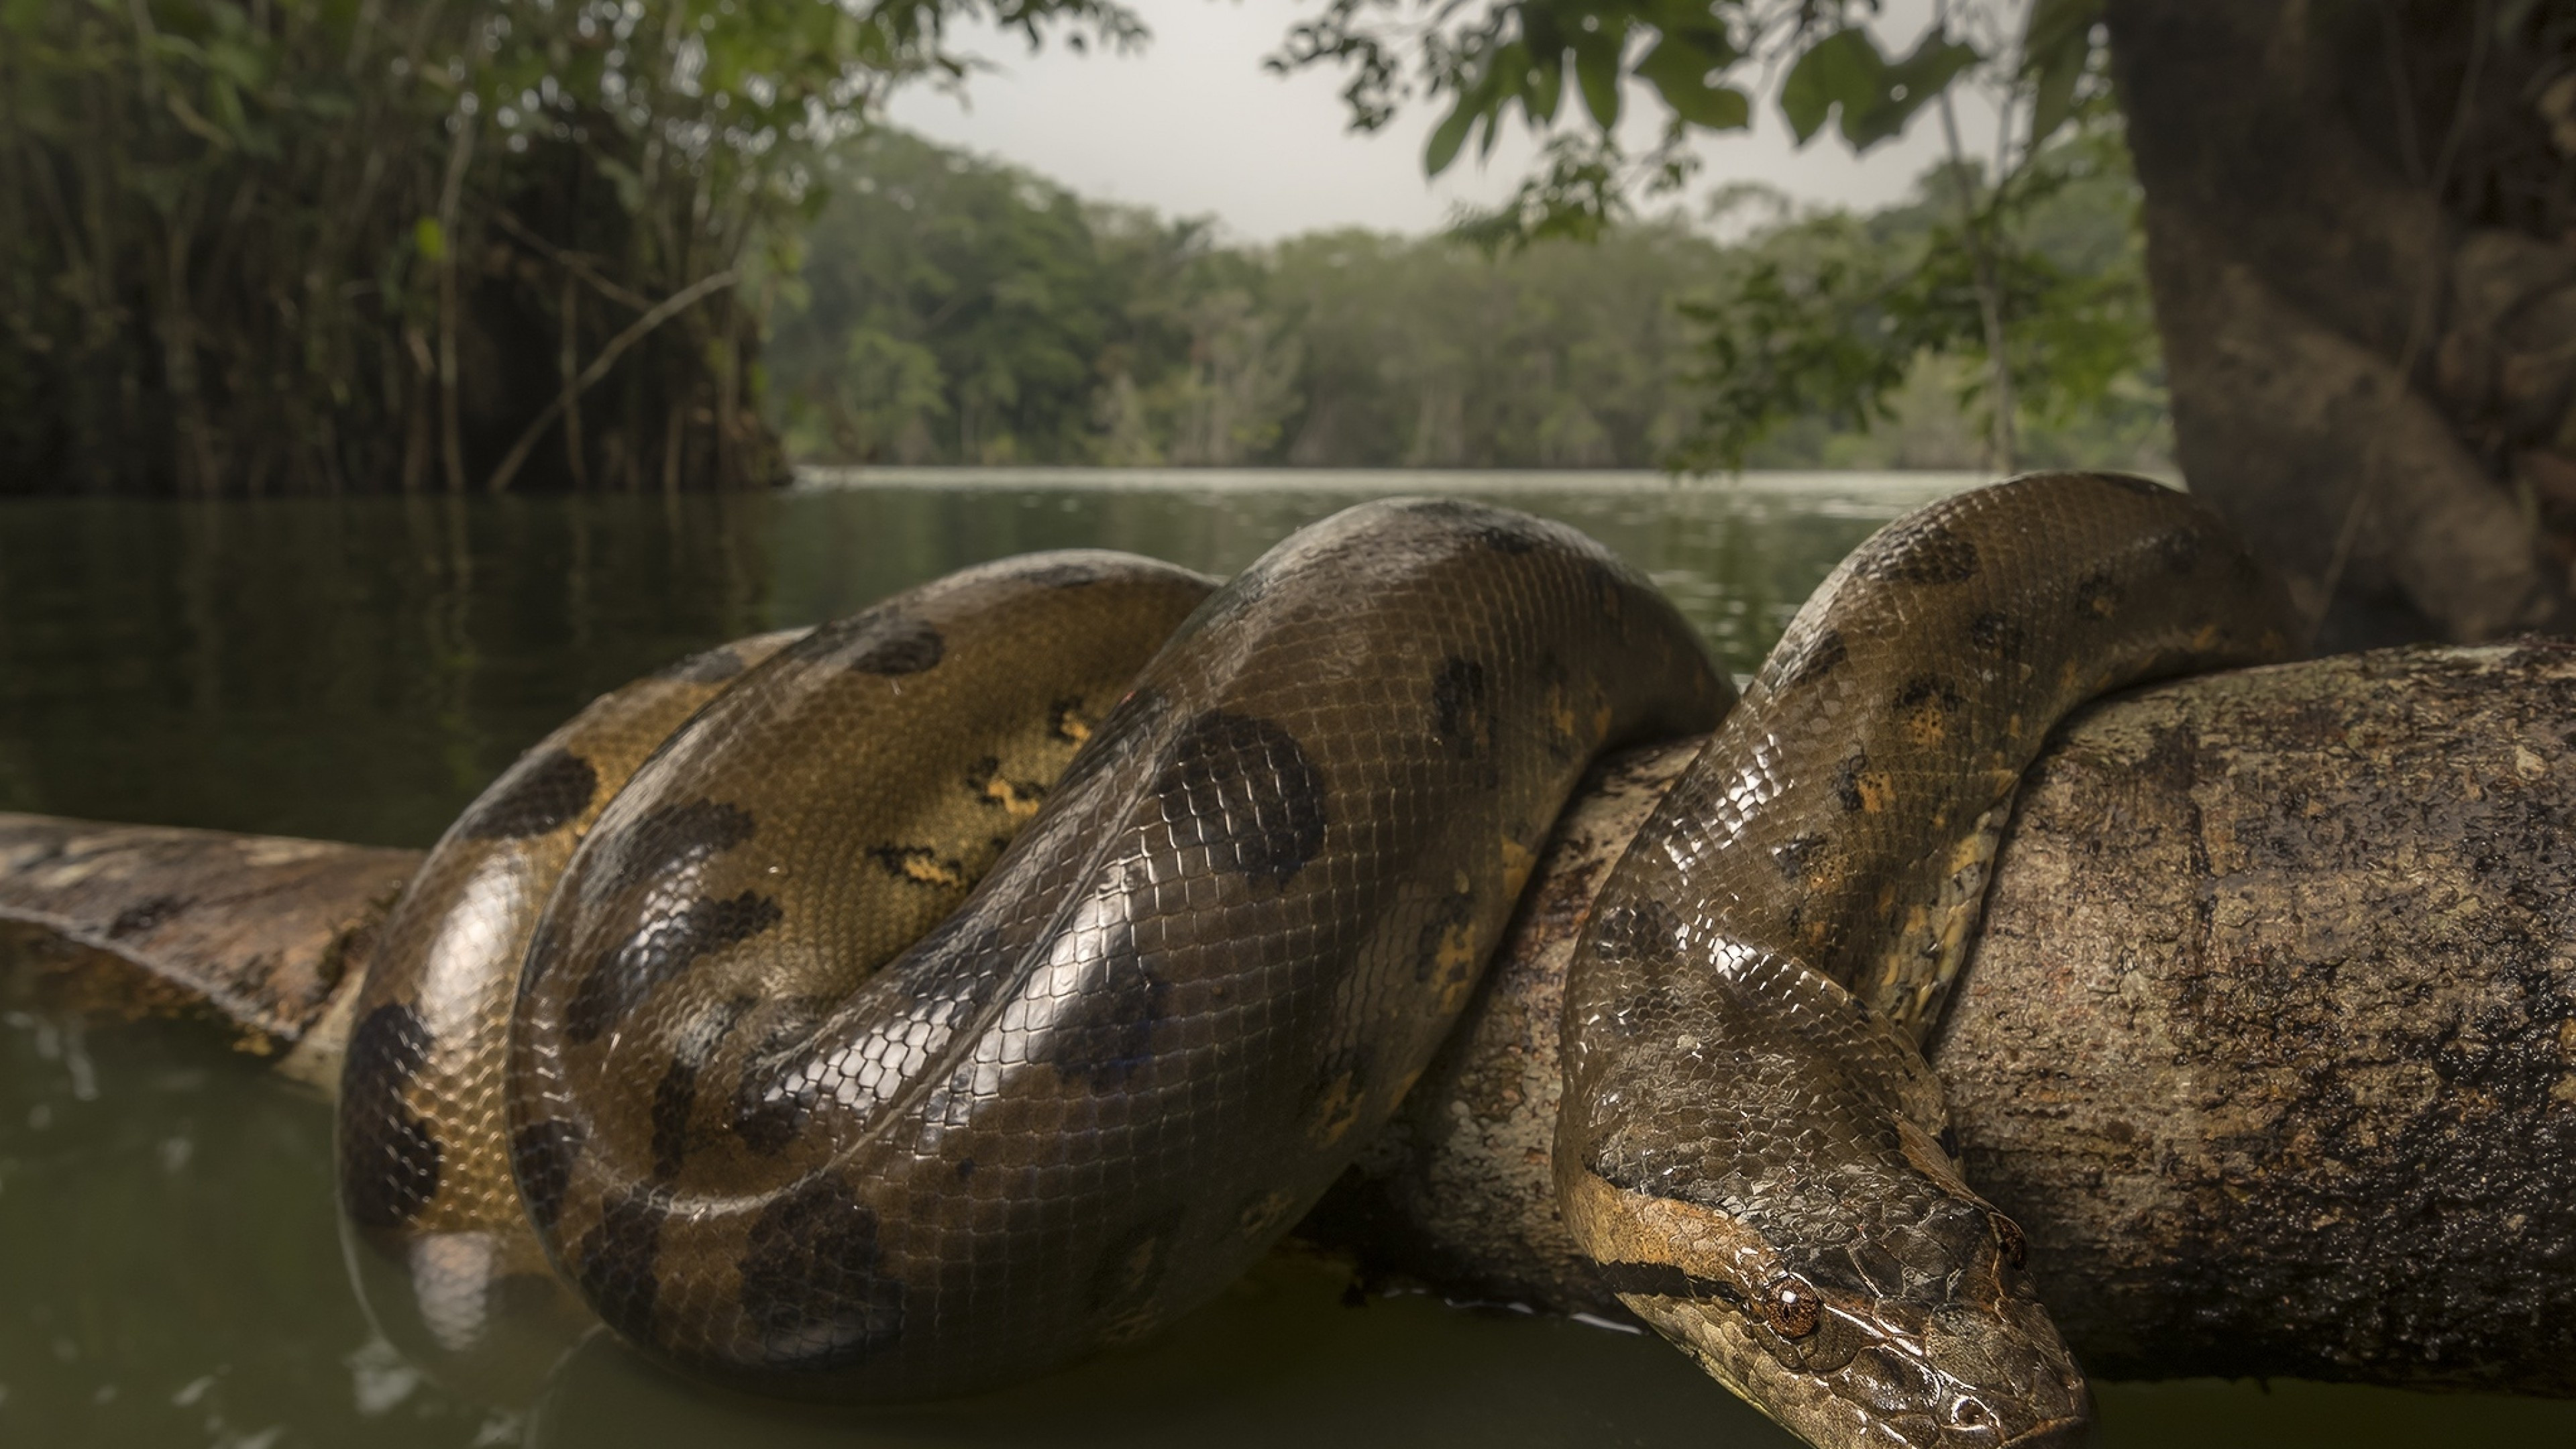 Anaconda, Wild snake lake, Reptiles wallpapers, UHD TV, 3840x2160 4K Desktop